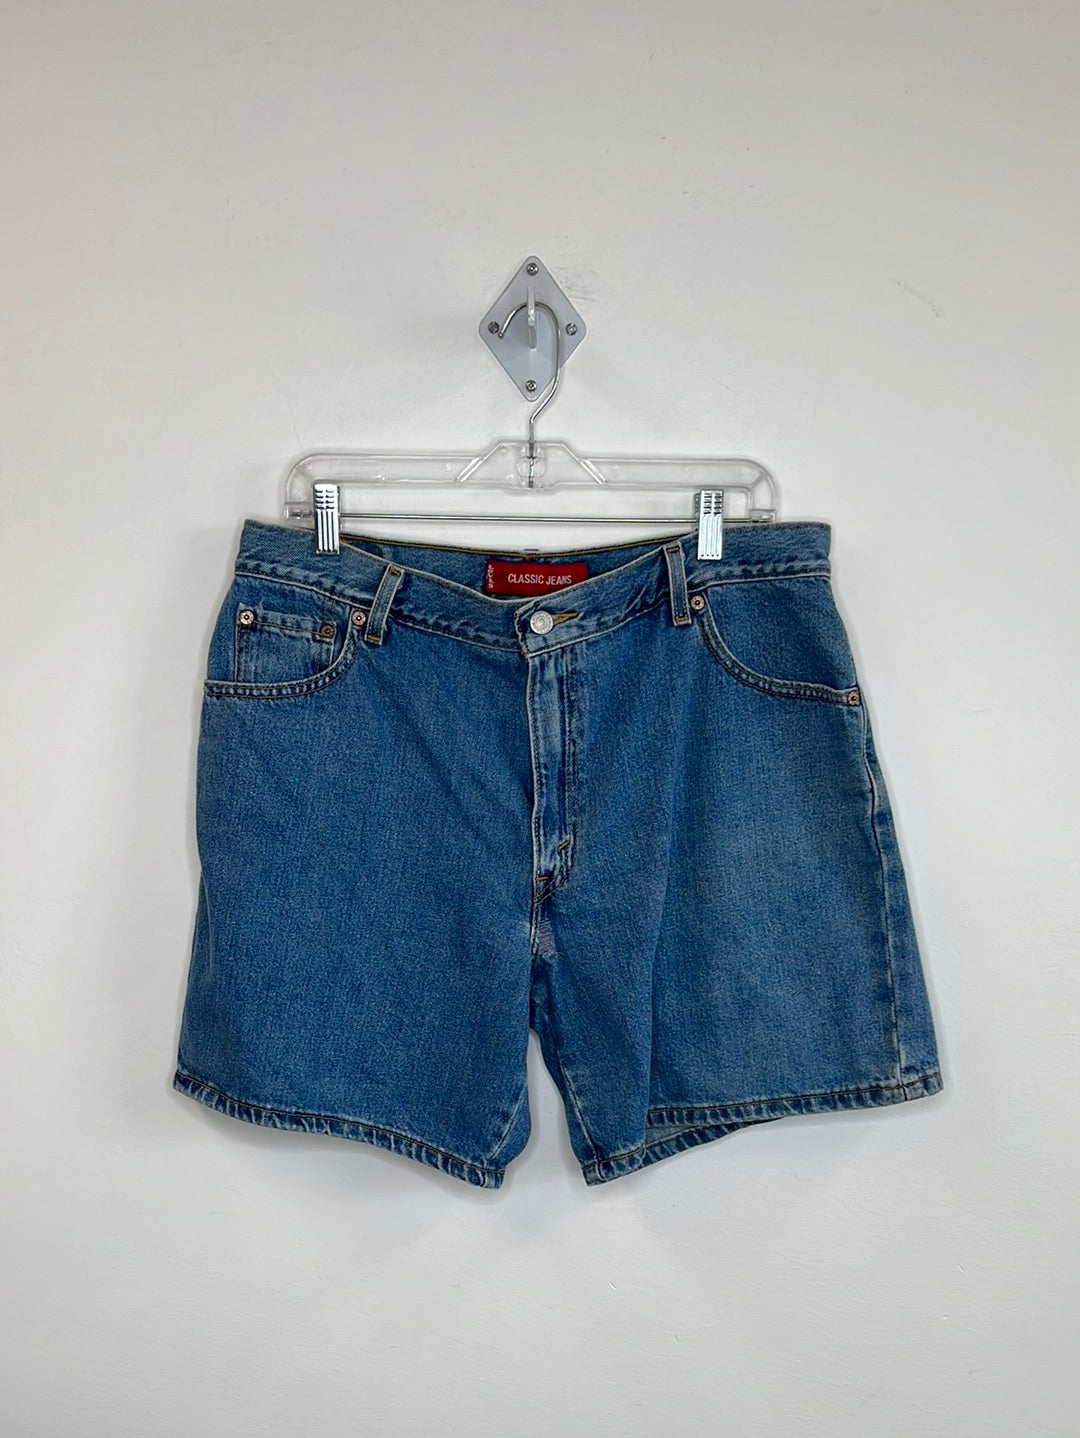 Retro Levi’s Classic Jeans Denim Shorts (16)